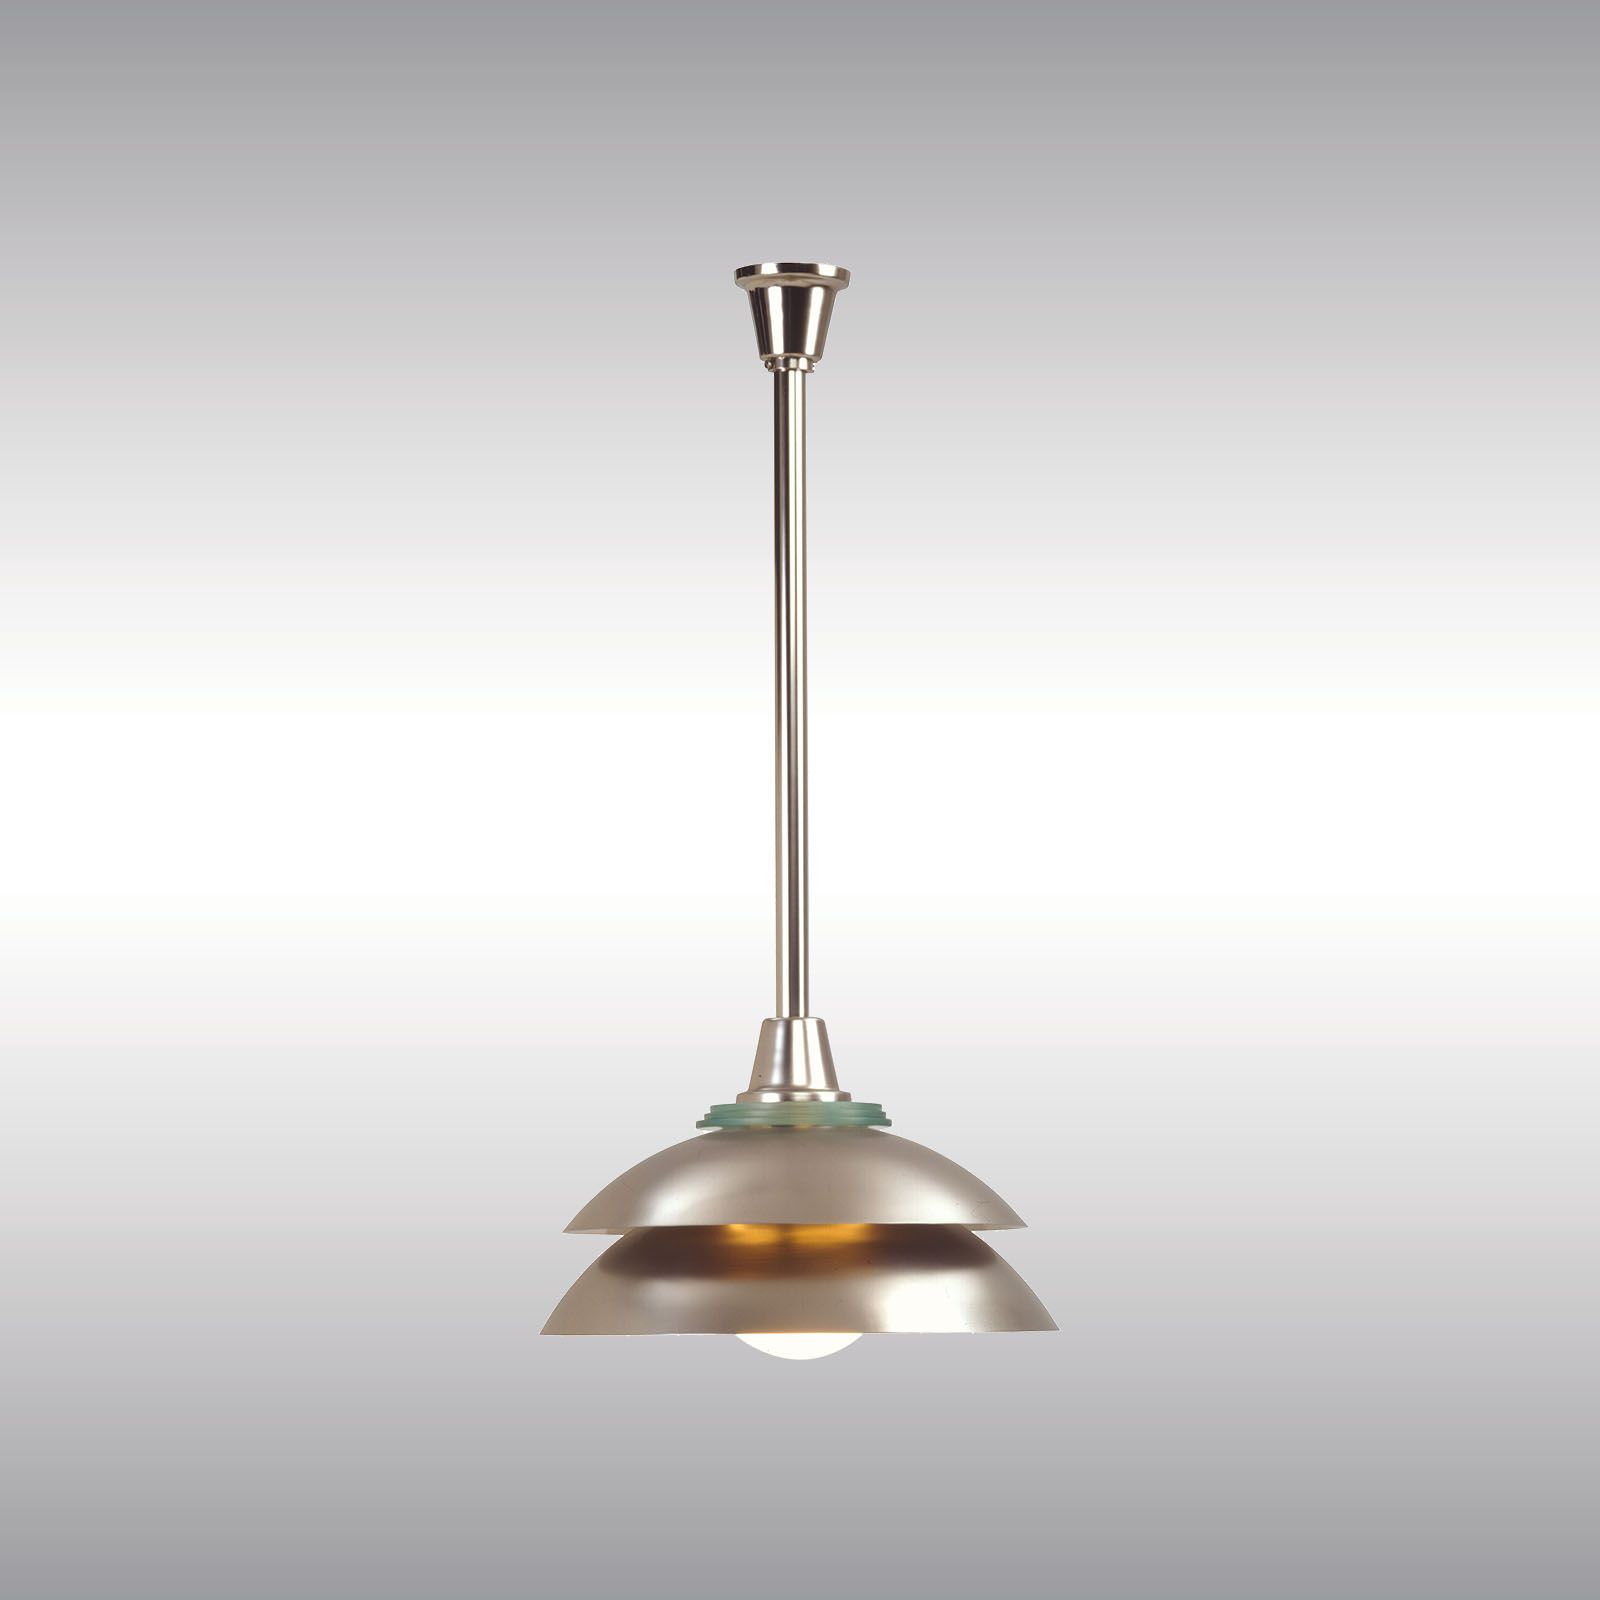 WOKA LAMPS VIENNA - OrderNr.: 9408|Bauhaus Pendant Lamp TRISTAN - Design: Deutsches Bauhaus